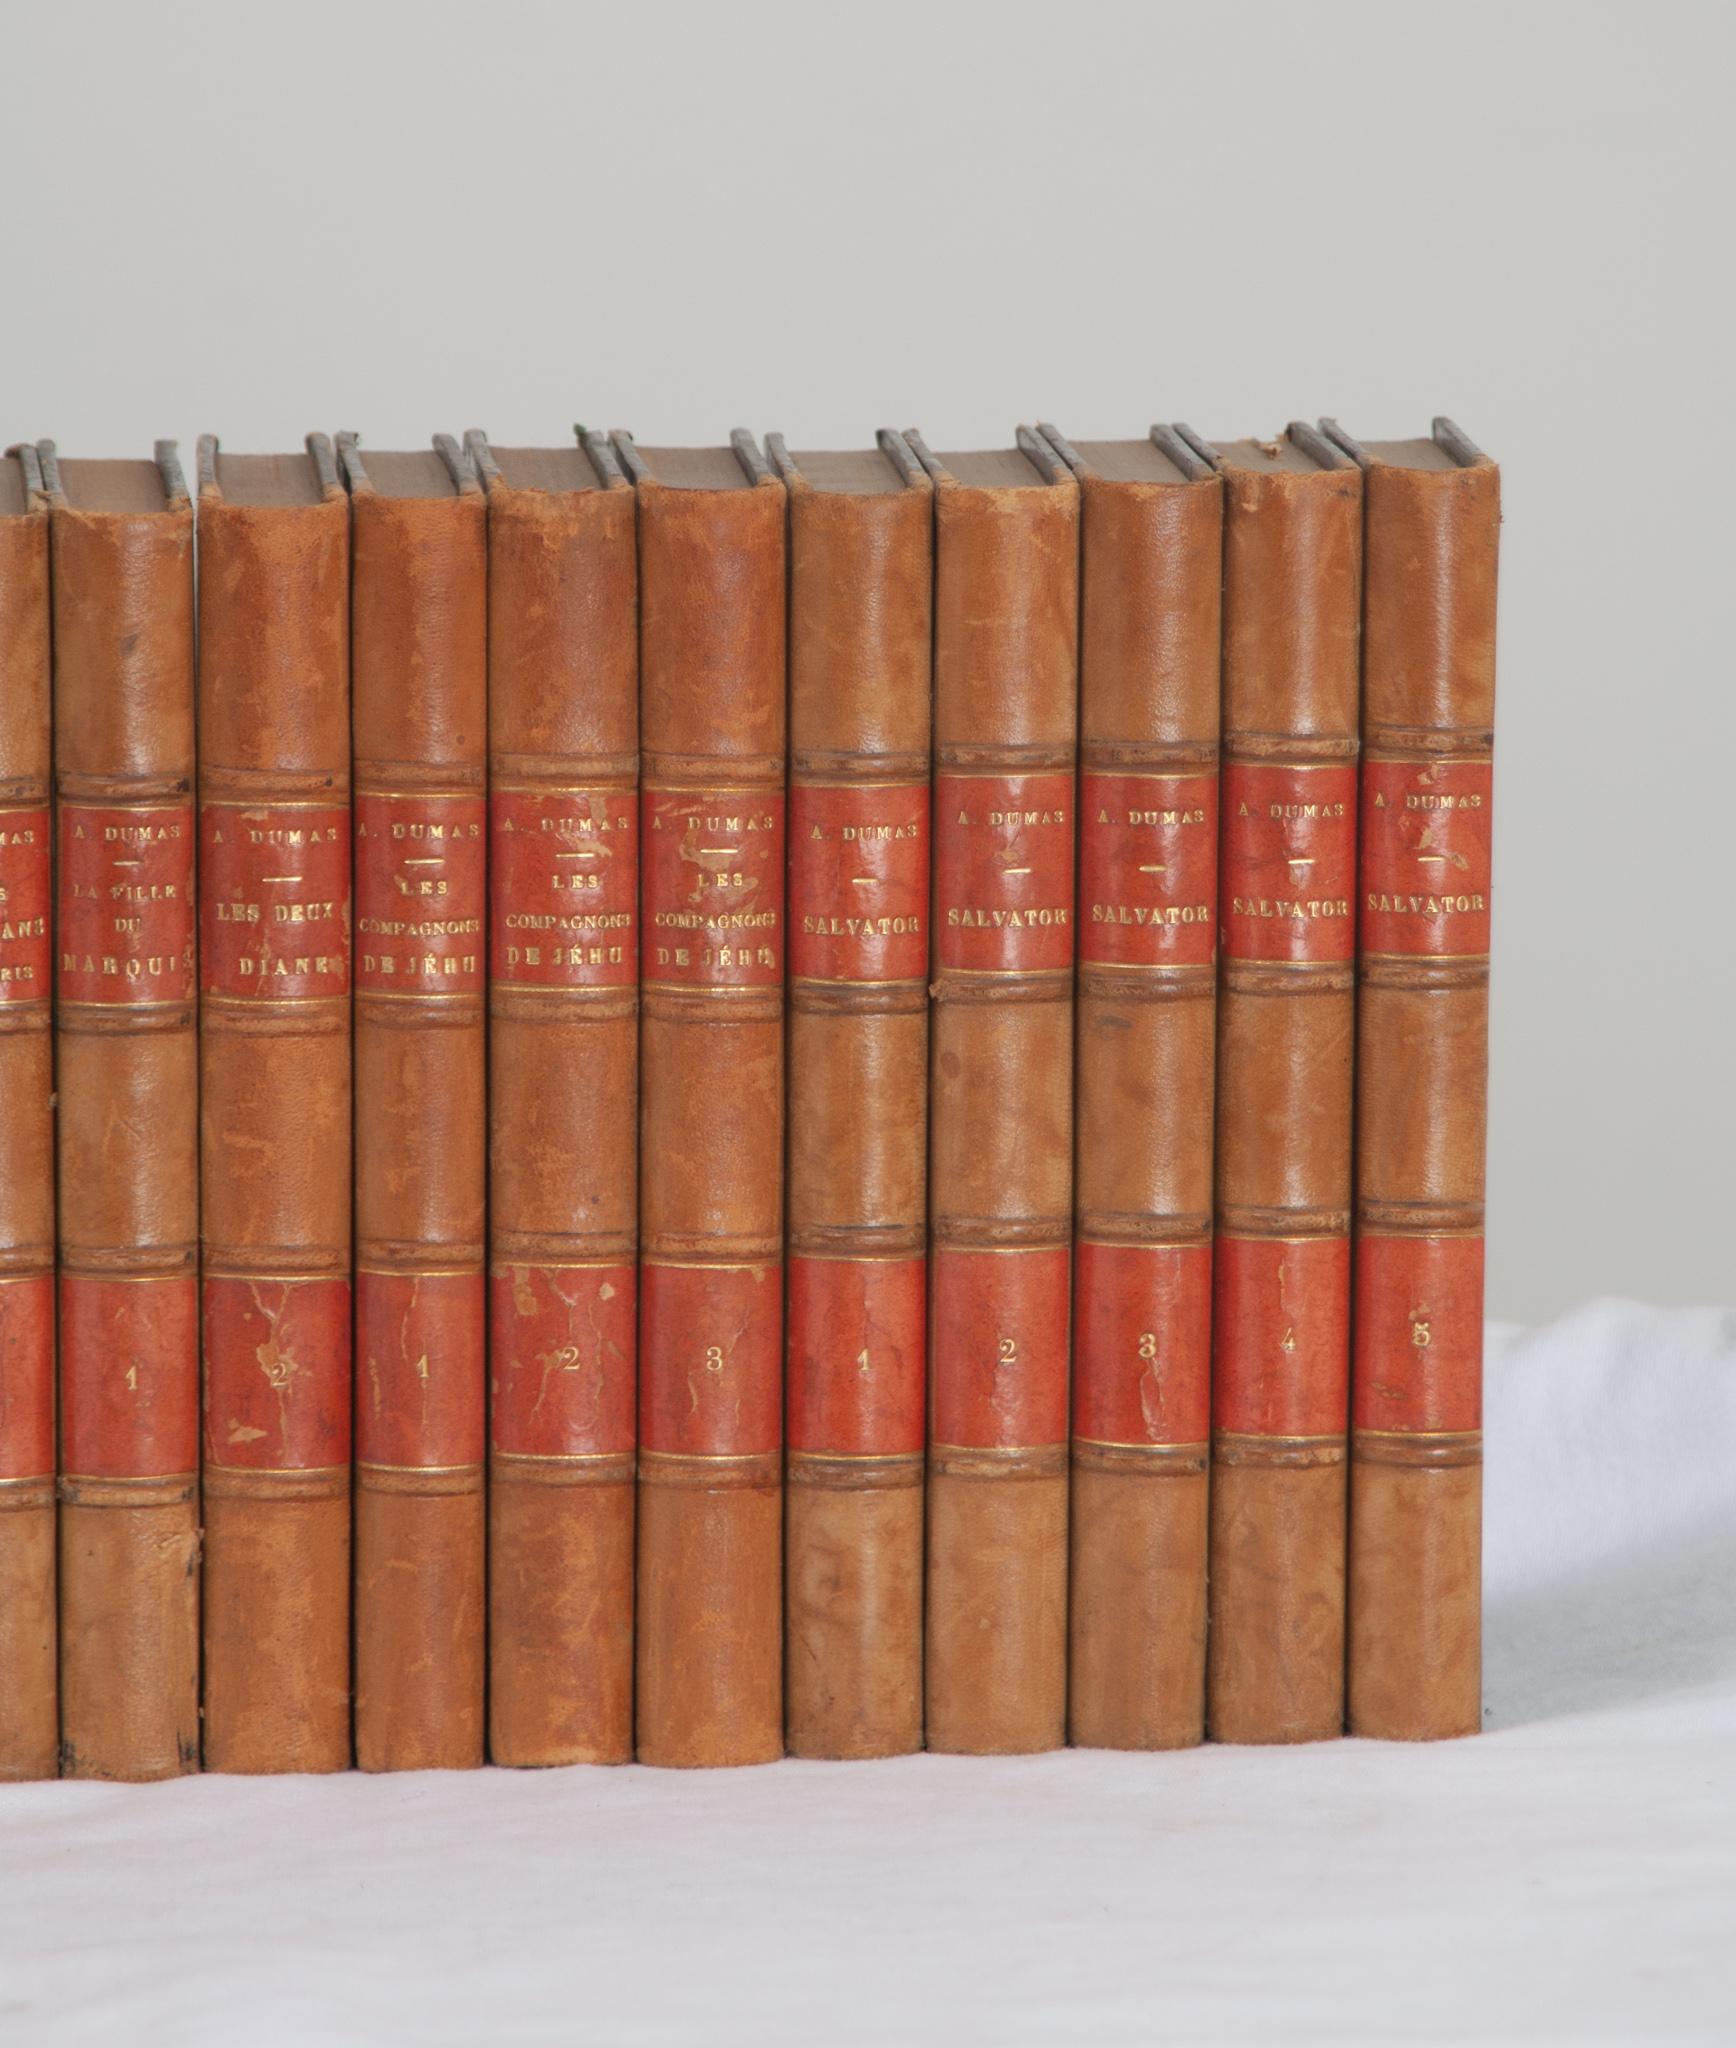 19th Century Set of 25 Books by French Author Alexandre Dumas